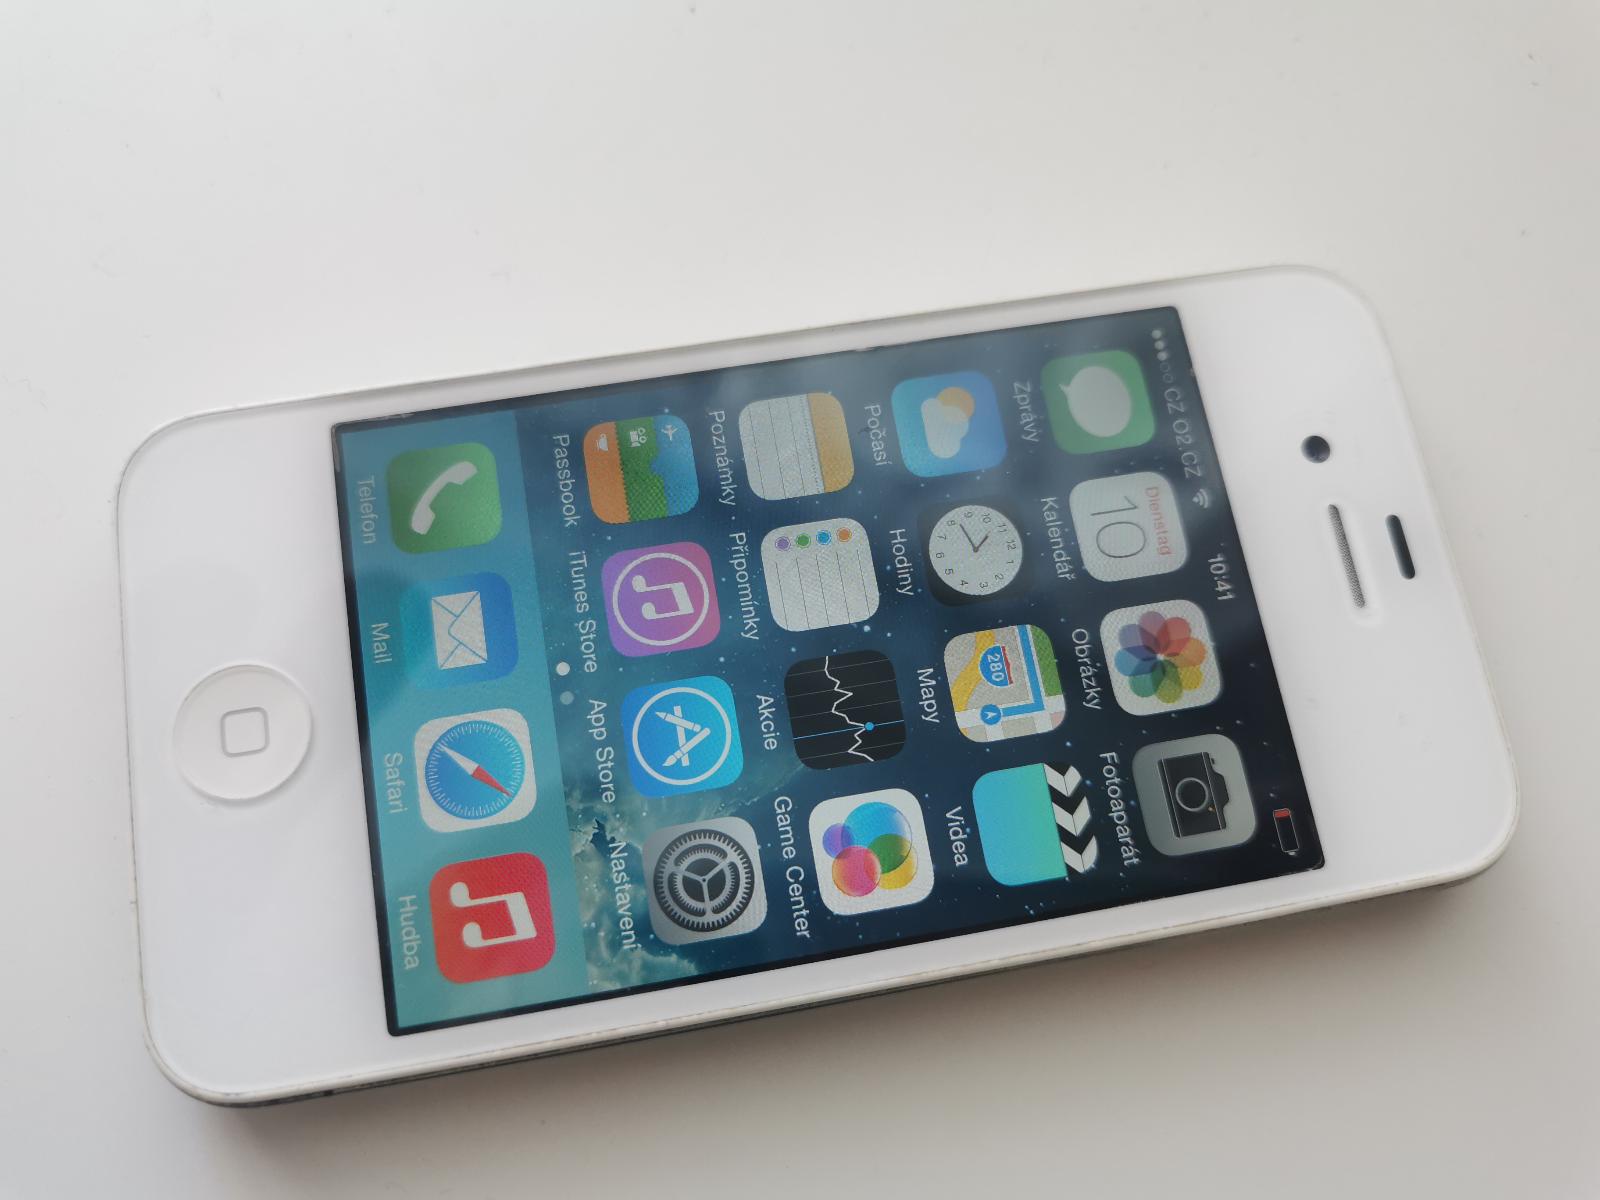 Apple Iphone 4 16GB, záruka  - Mobily a chytrá elektronika